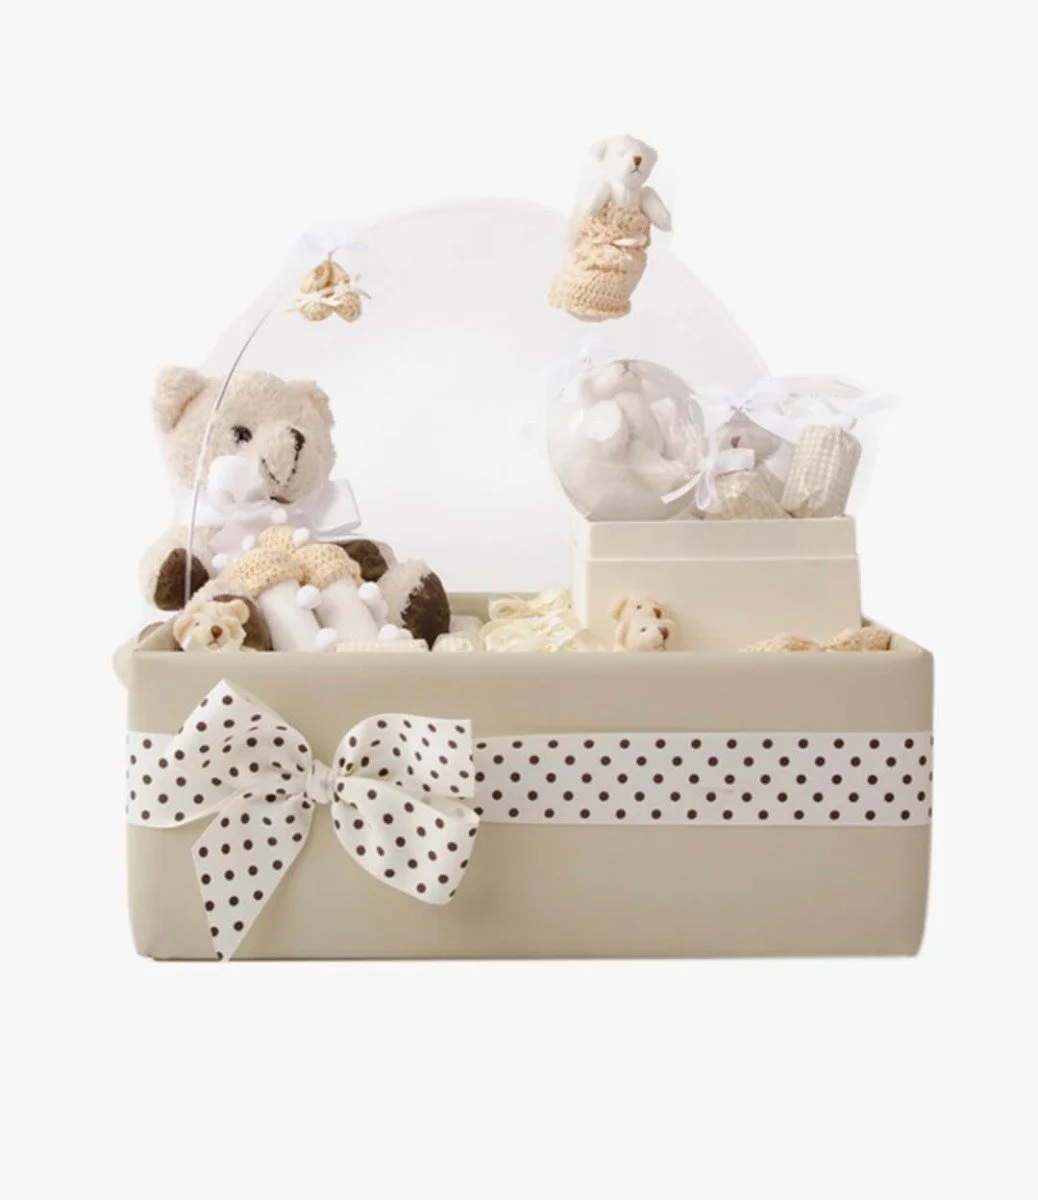 Big Bear Hug Baby Gift Set - Medium